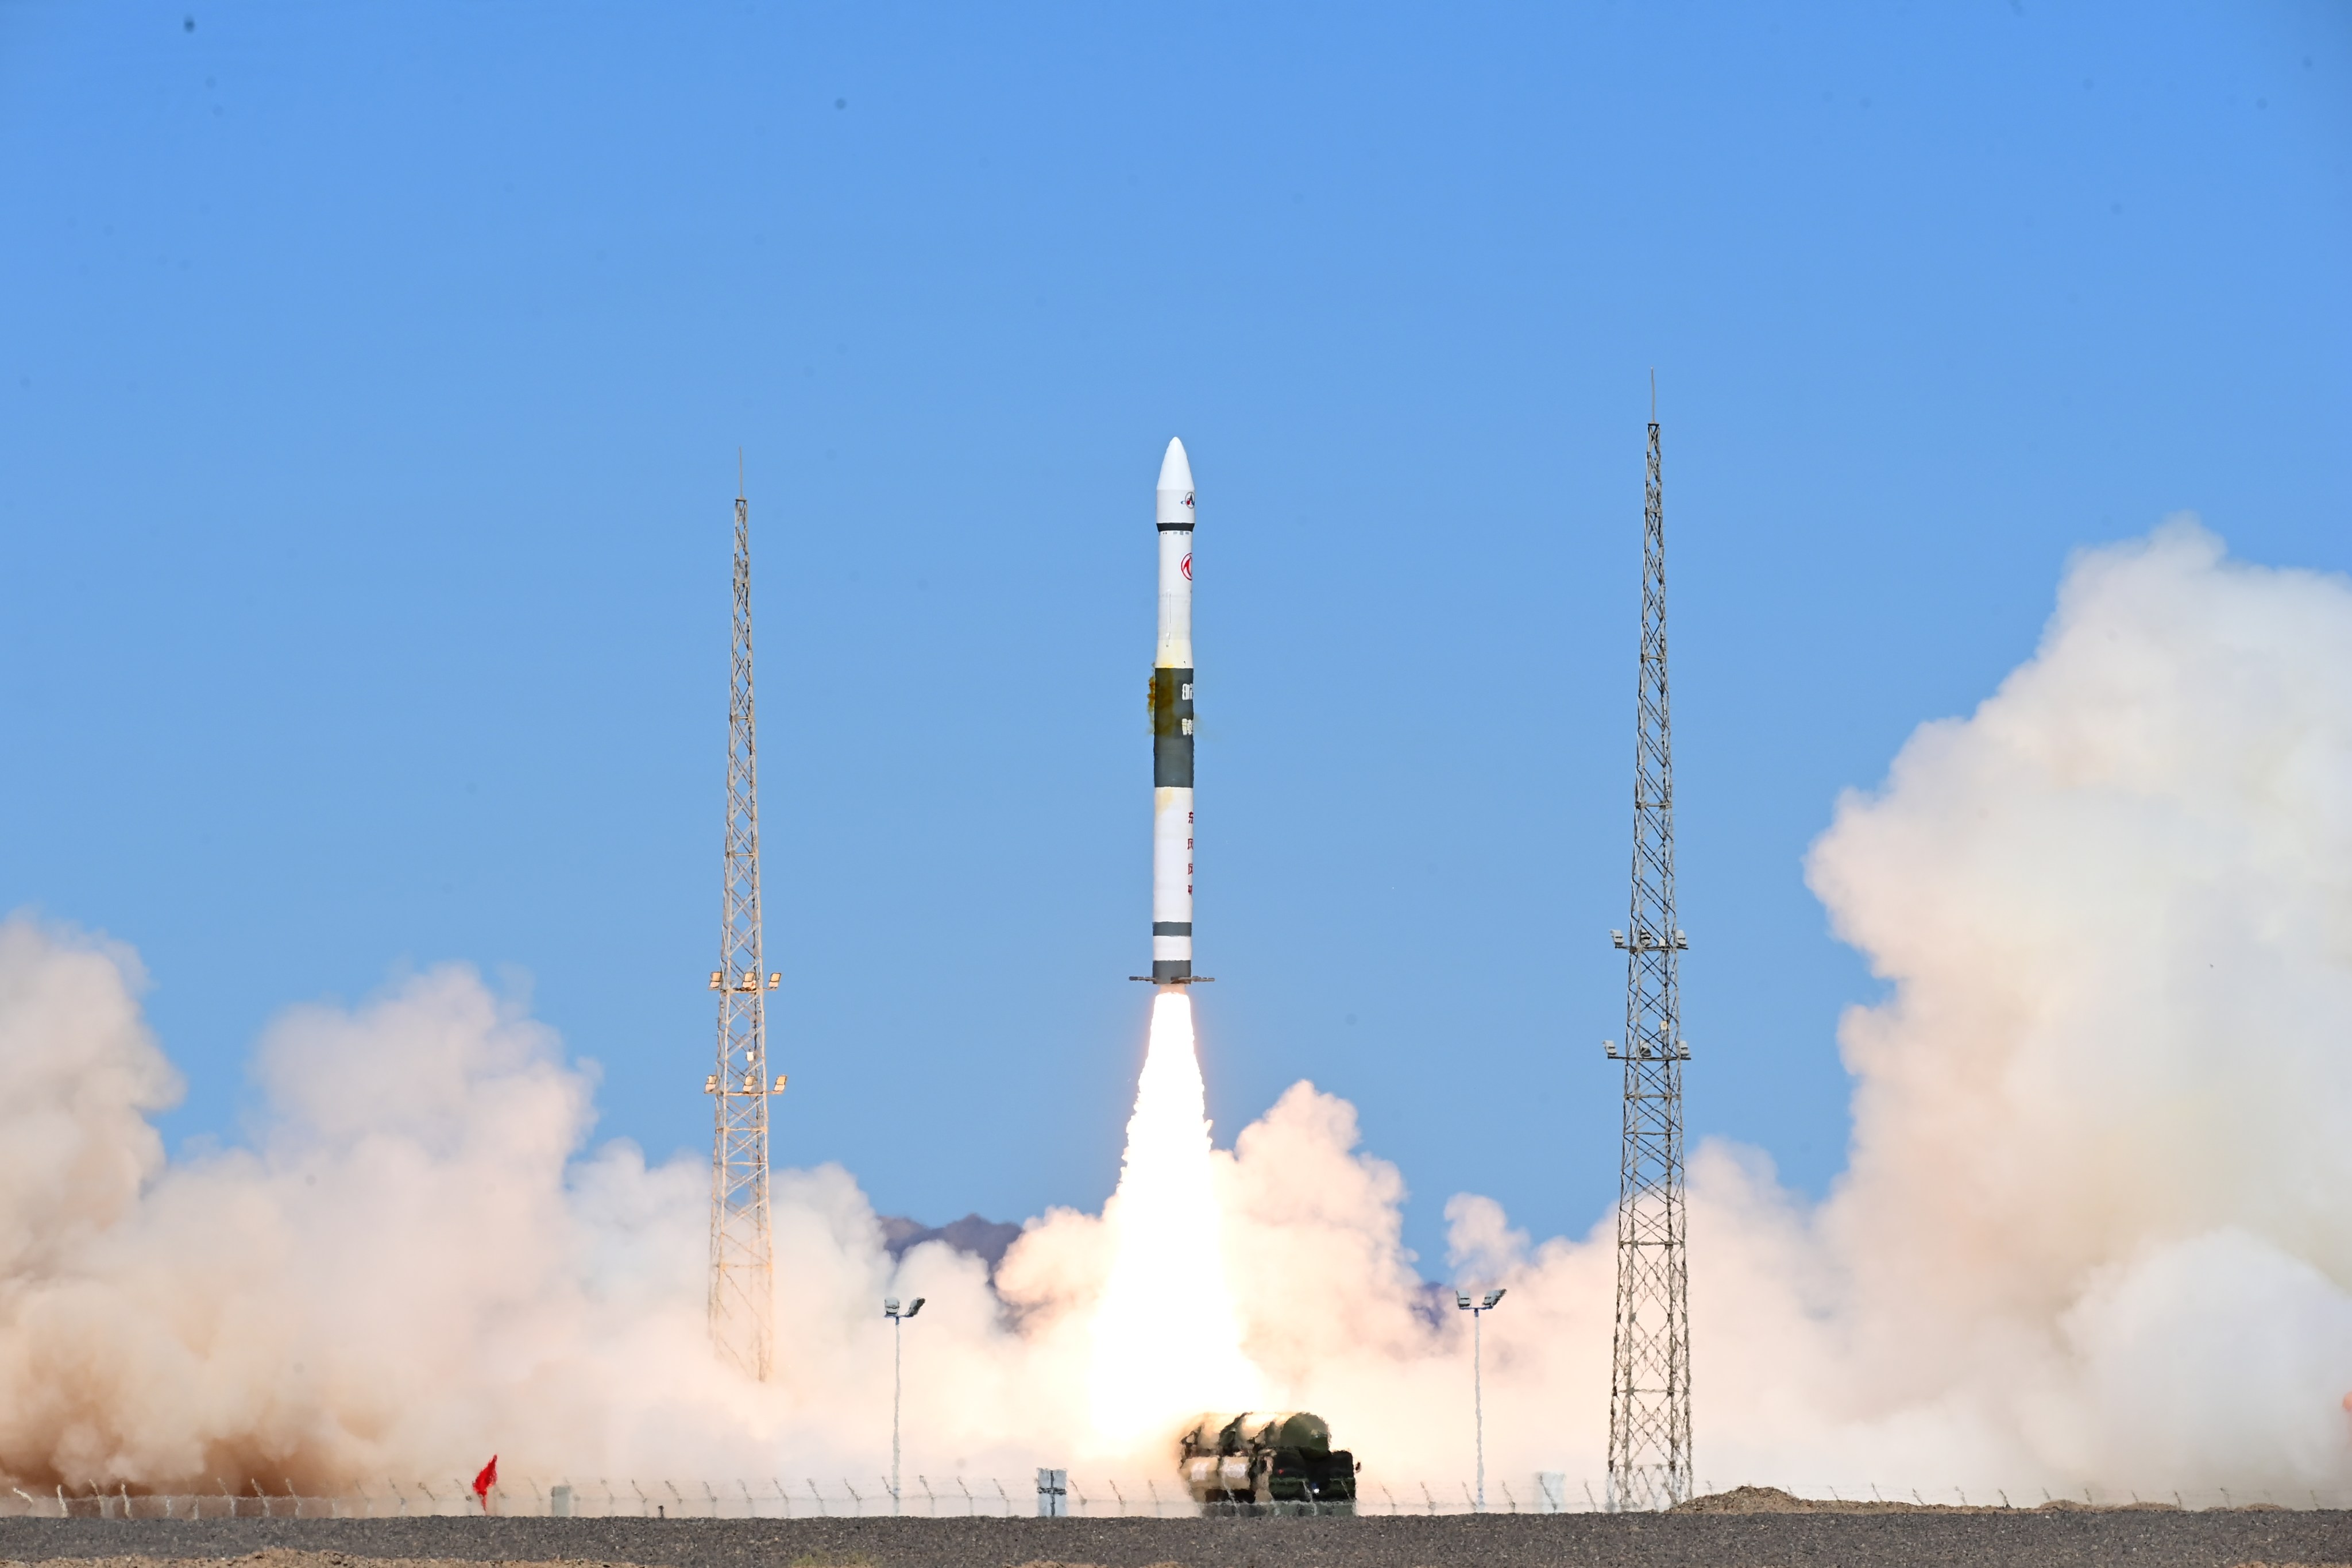  The latest Kuaizhou-1A rocket launch took place last week in the Gobi desert. Photo: Xinhua